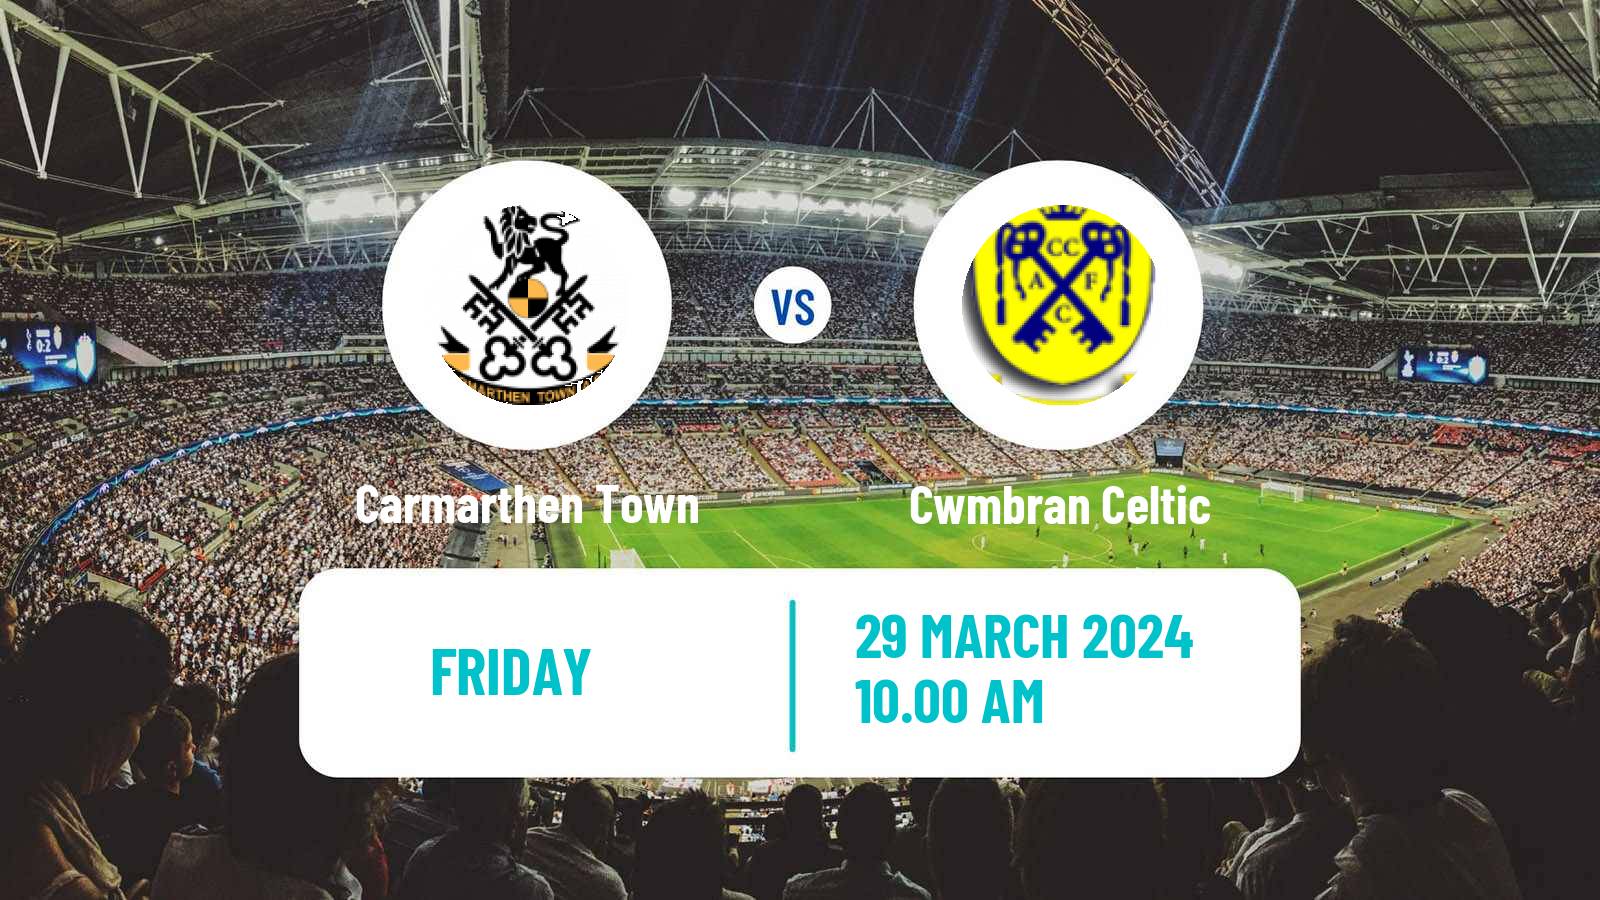 Soccer Welsh Cymru South Carmarthen Town - Cwmbran Celtic